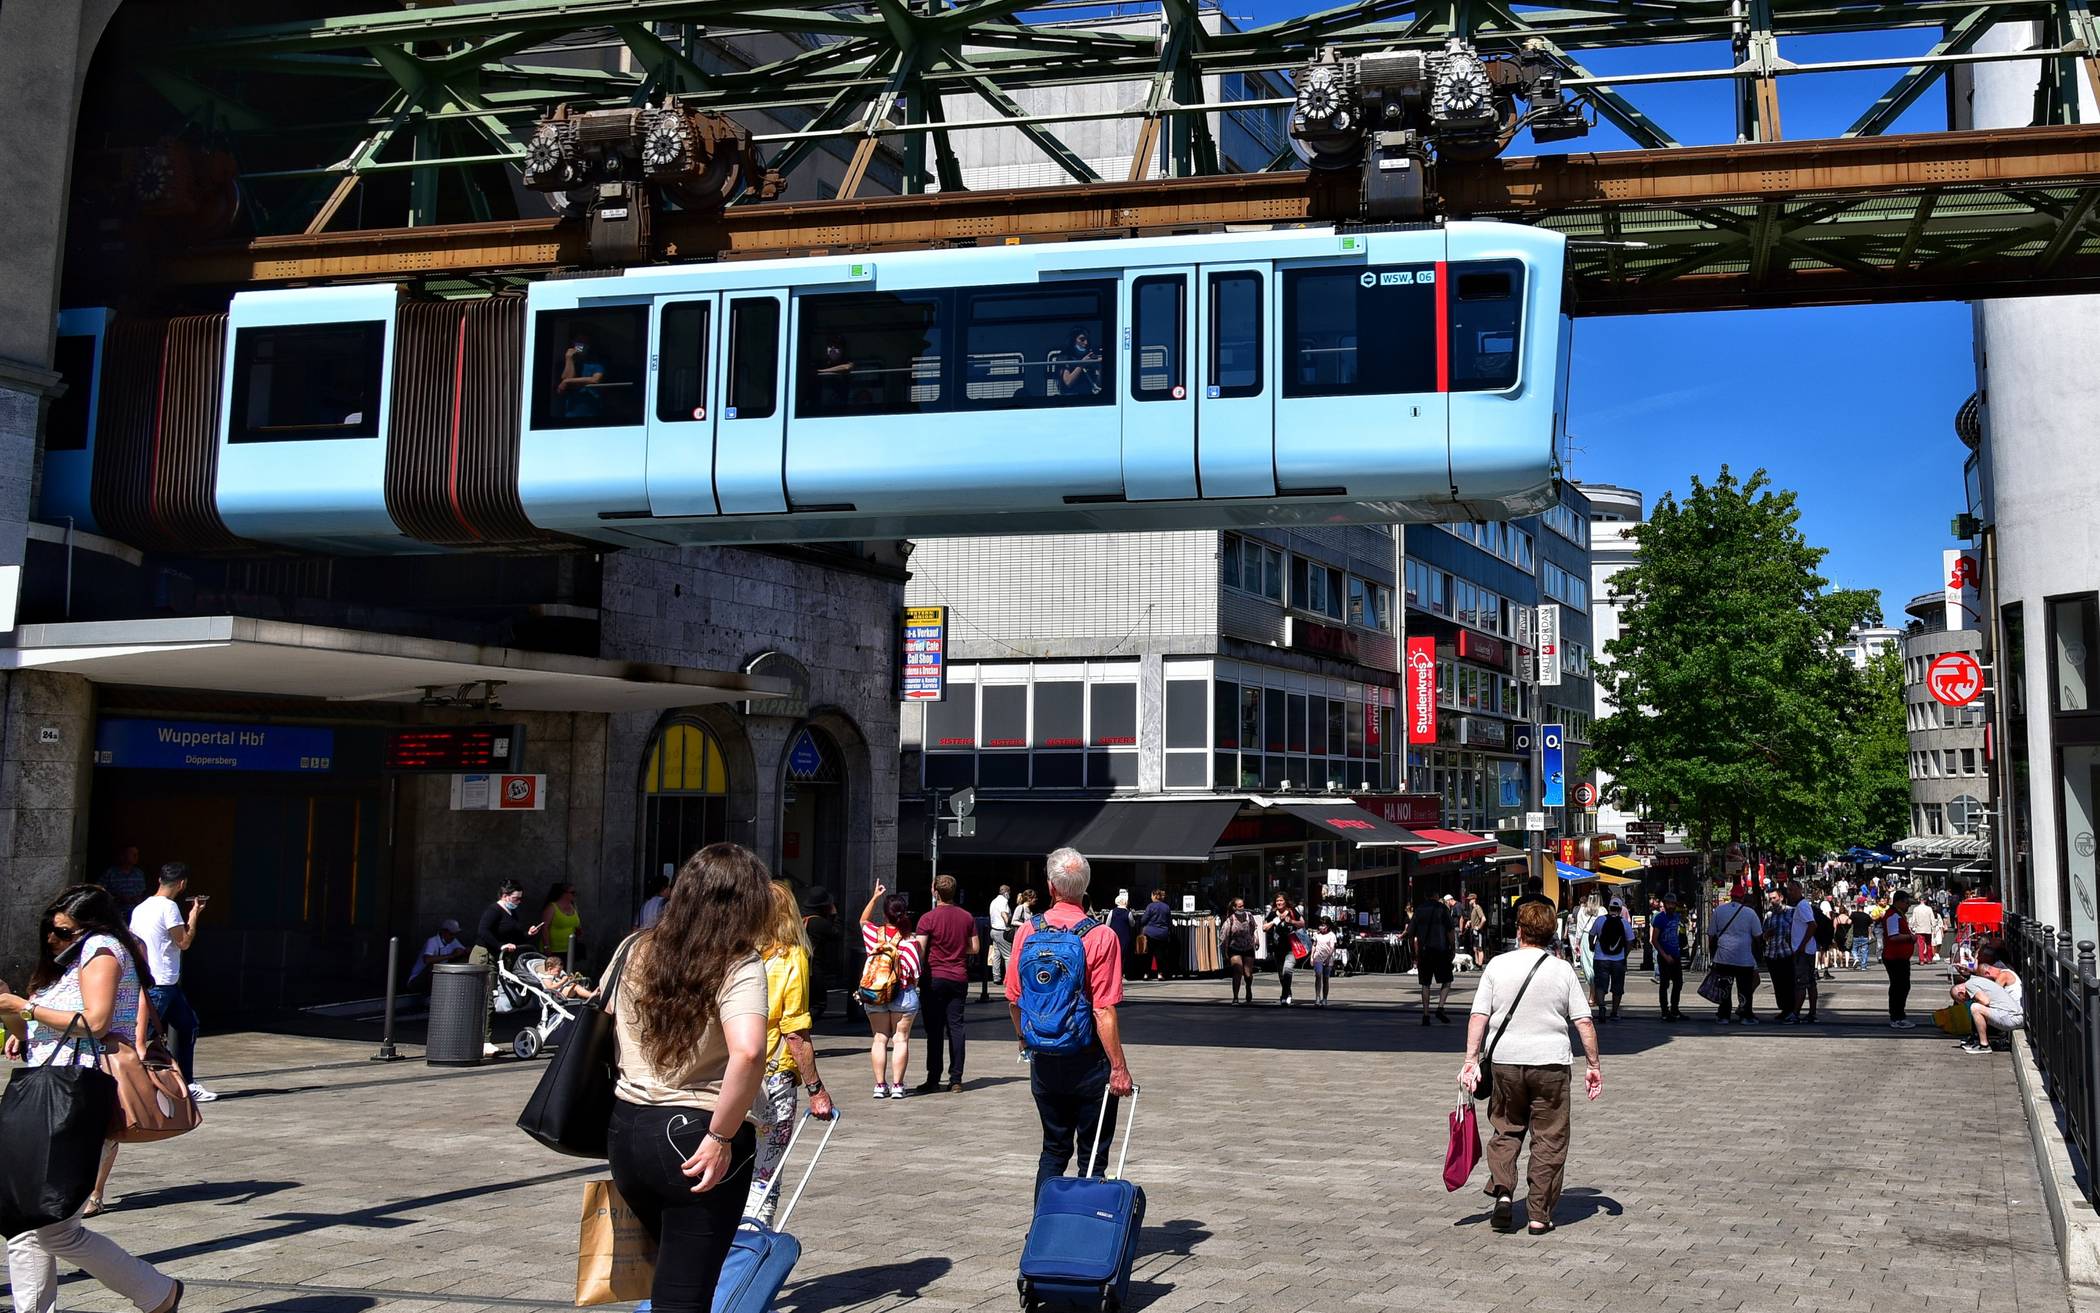  Wuppertal grüßt aus dem Bergischen Land – allerdings nicht über offizielle städtische Social-Media-Accounts. 